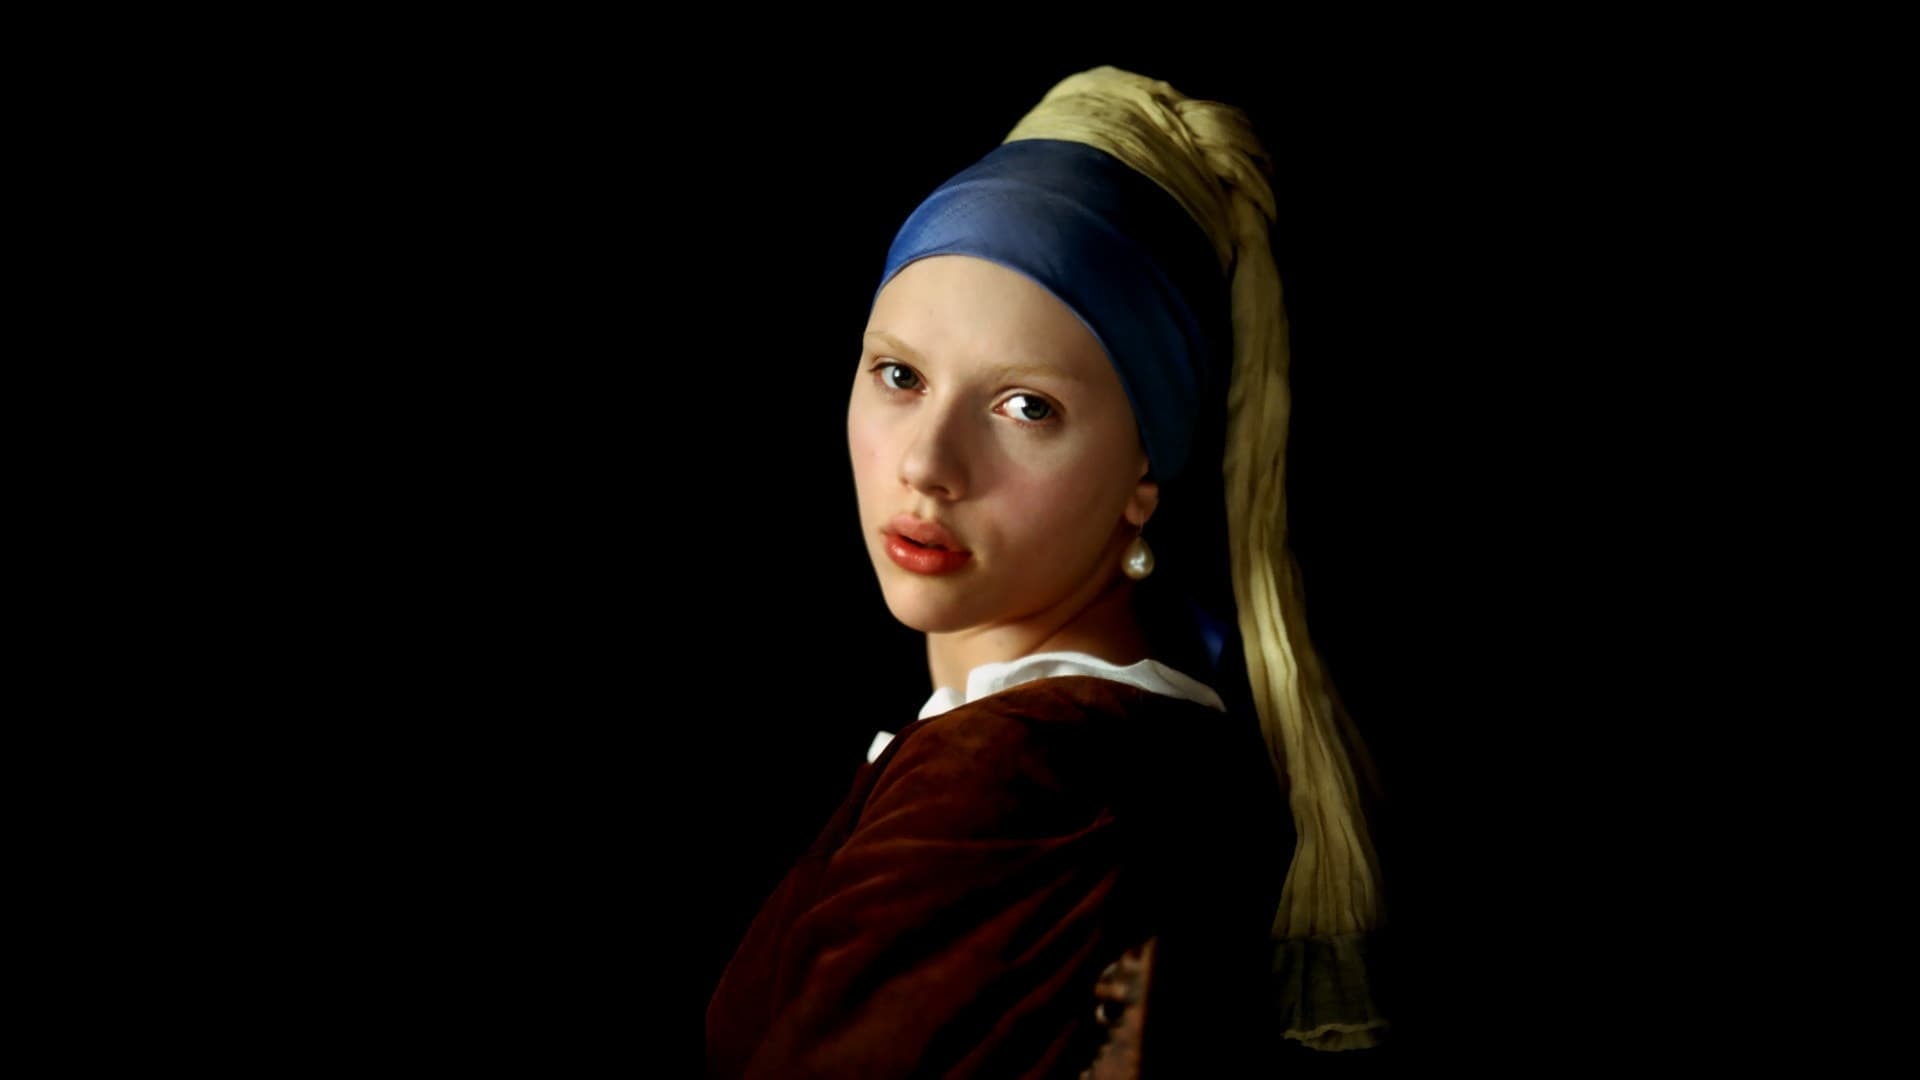 Girl with a Pearl Earring, 2003 backdrops, the movie database, TMDB, 1920x1080 Full HD Desktop